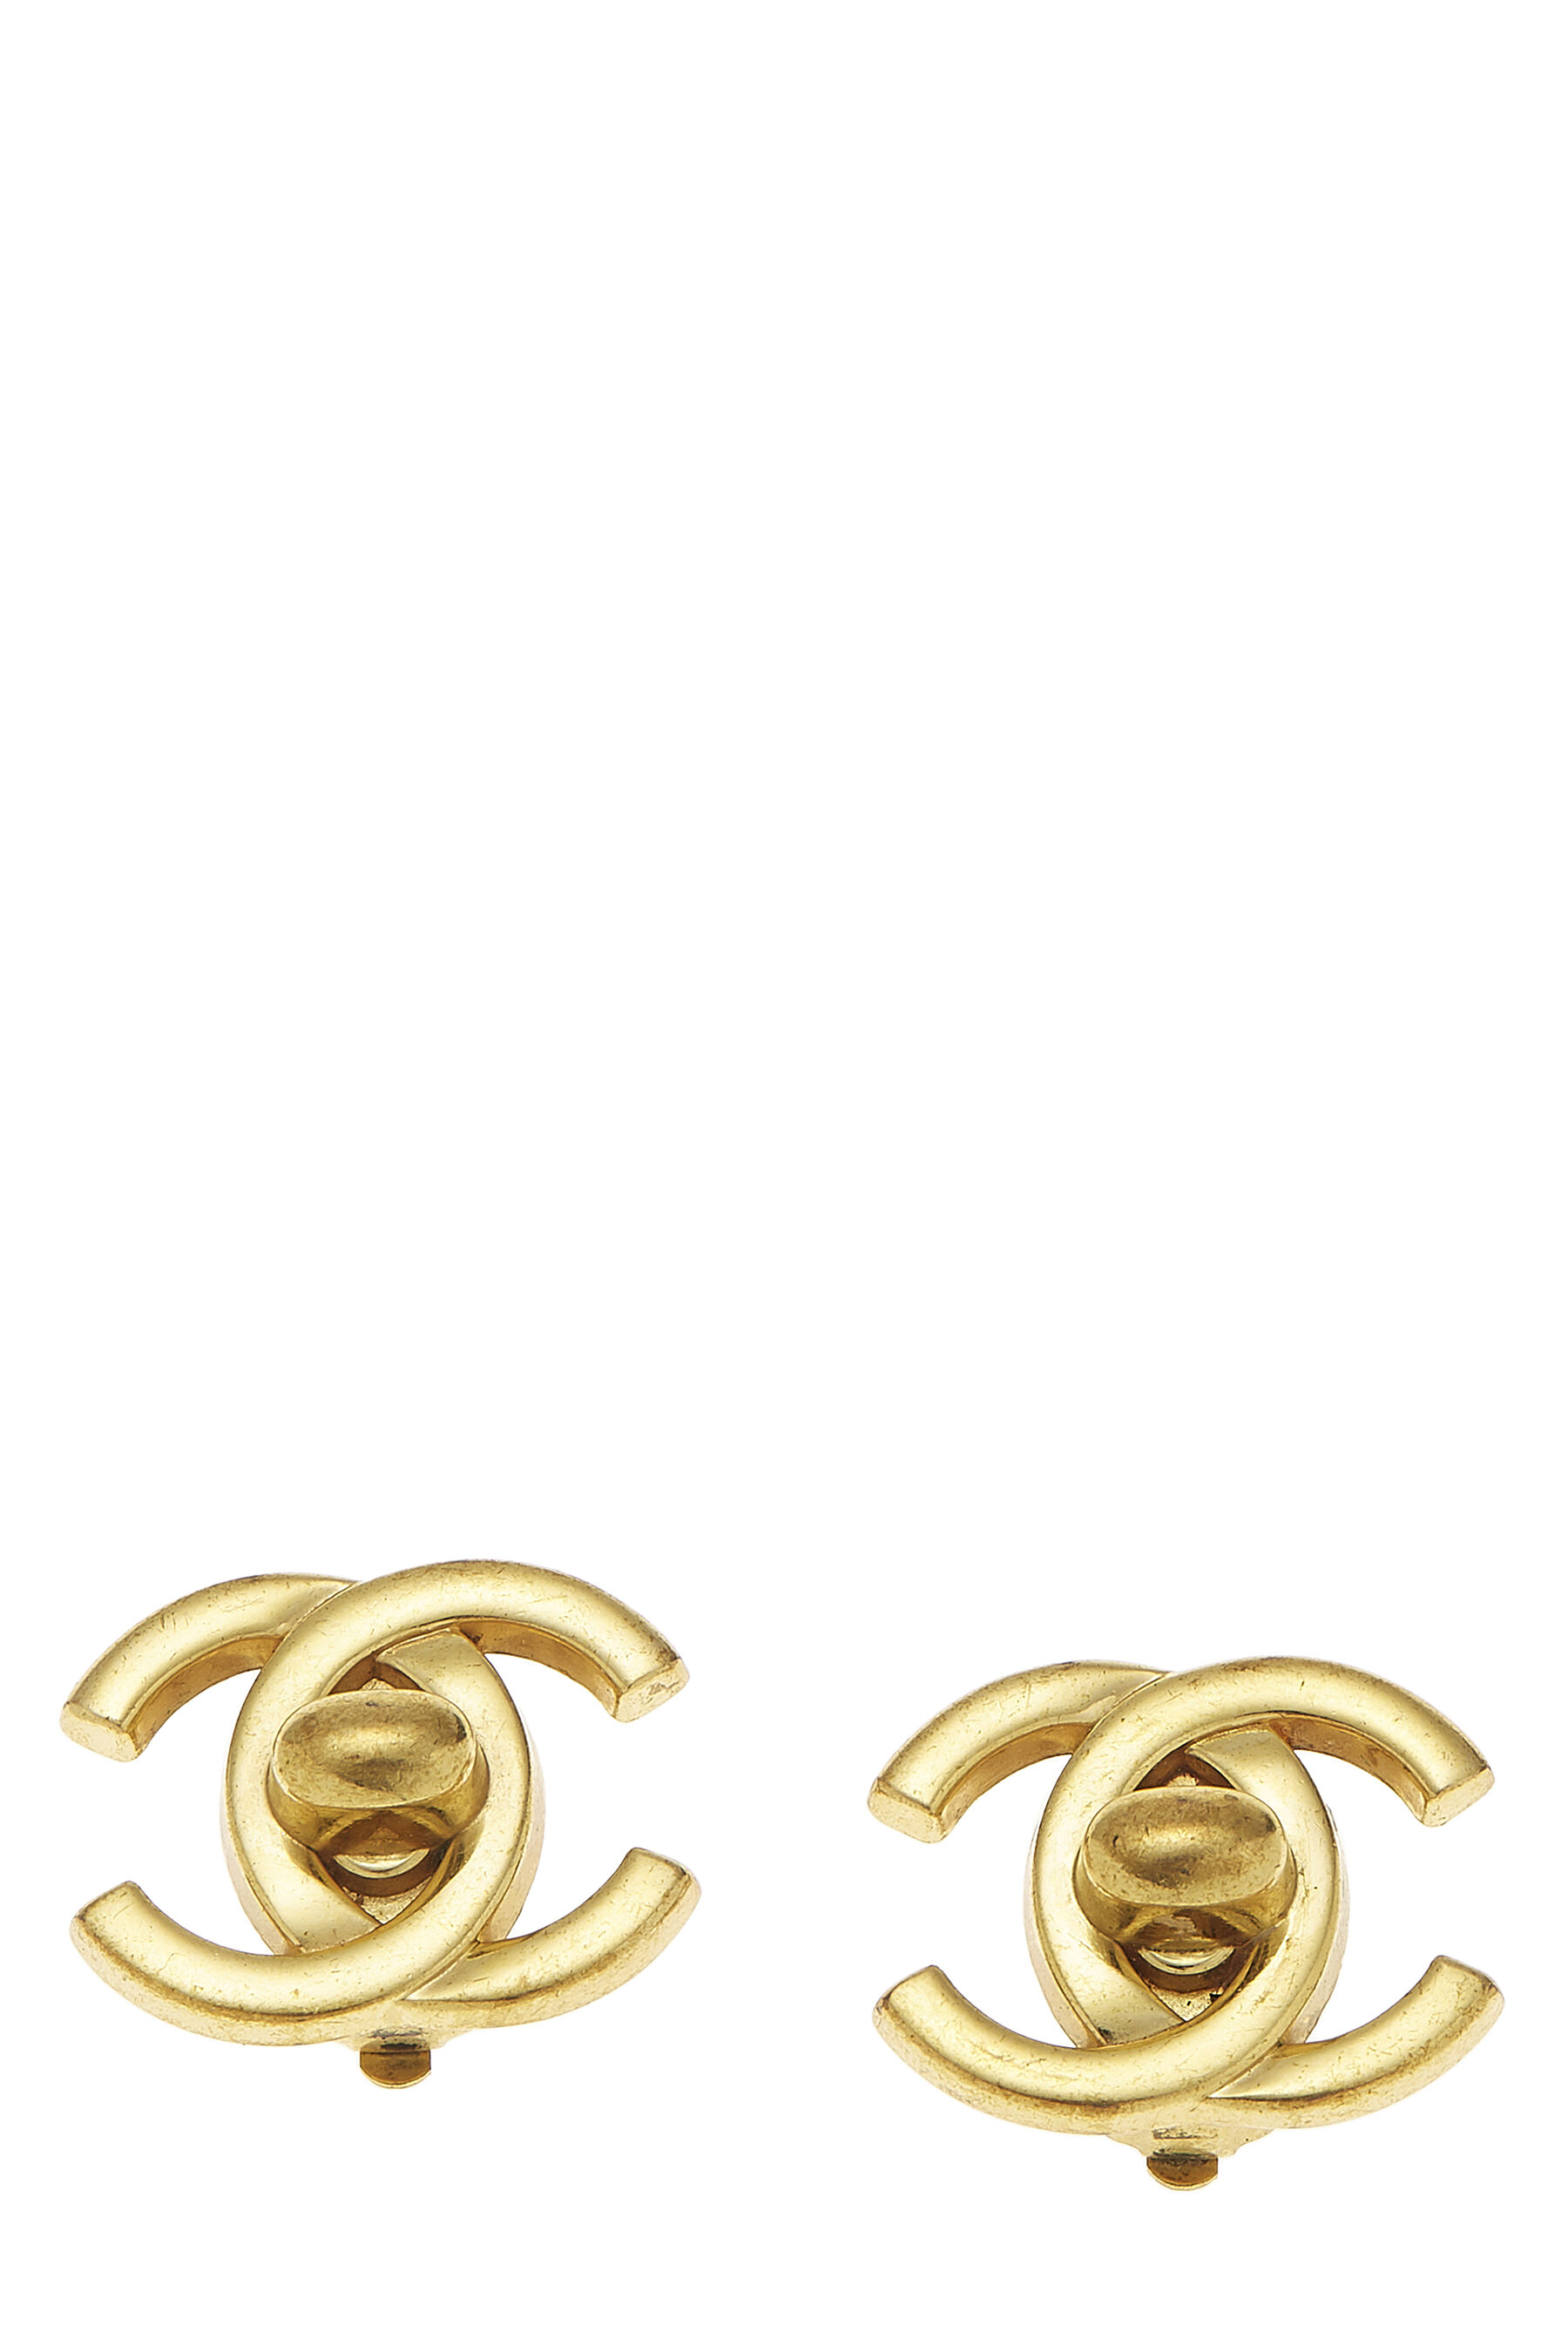 Pre-Owned Chanel CC Turnlock Earrings